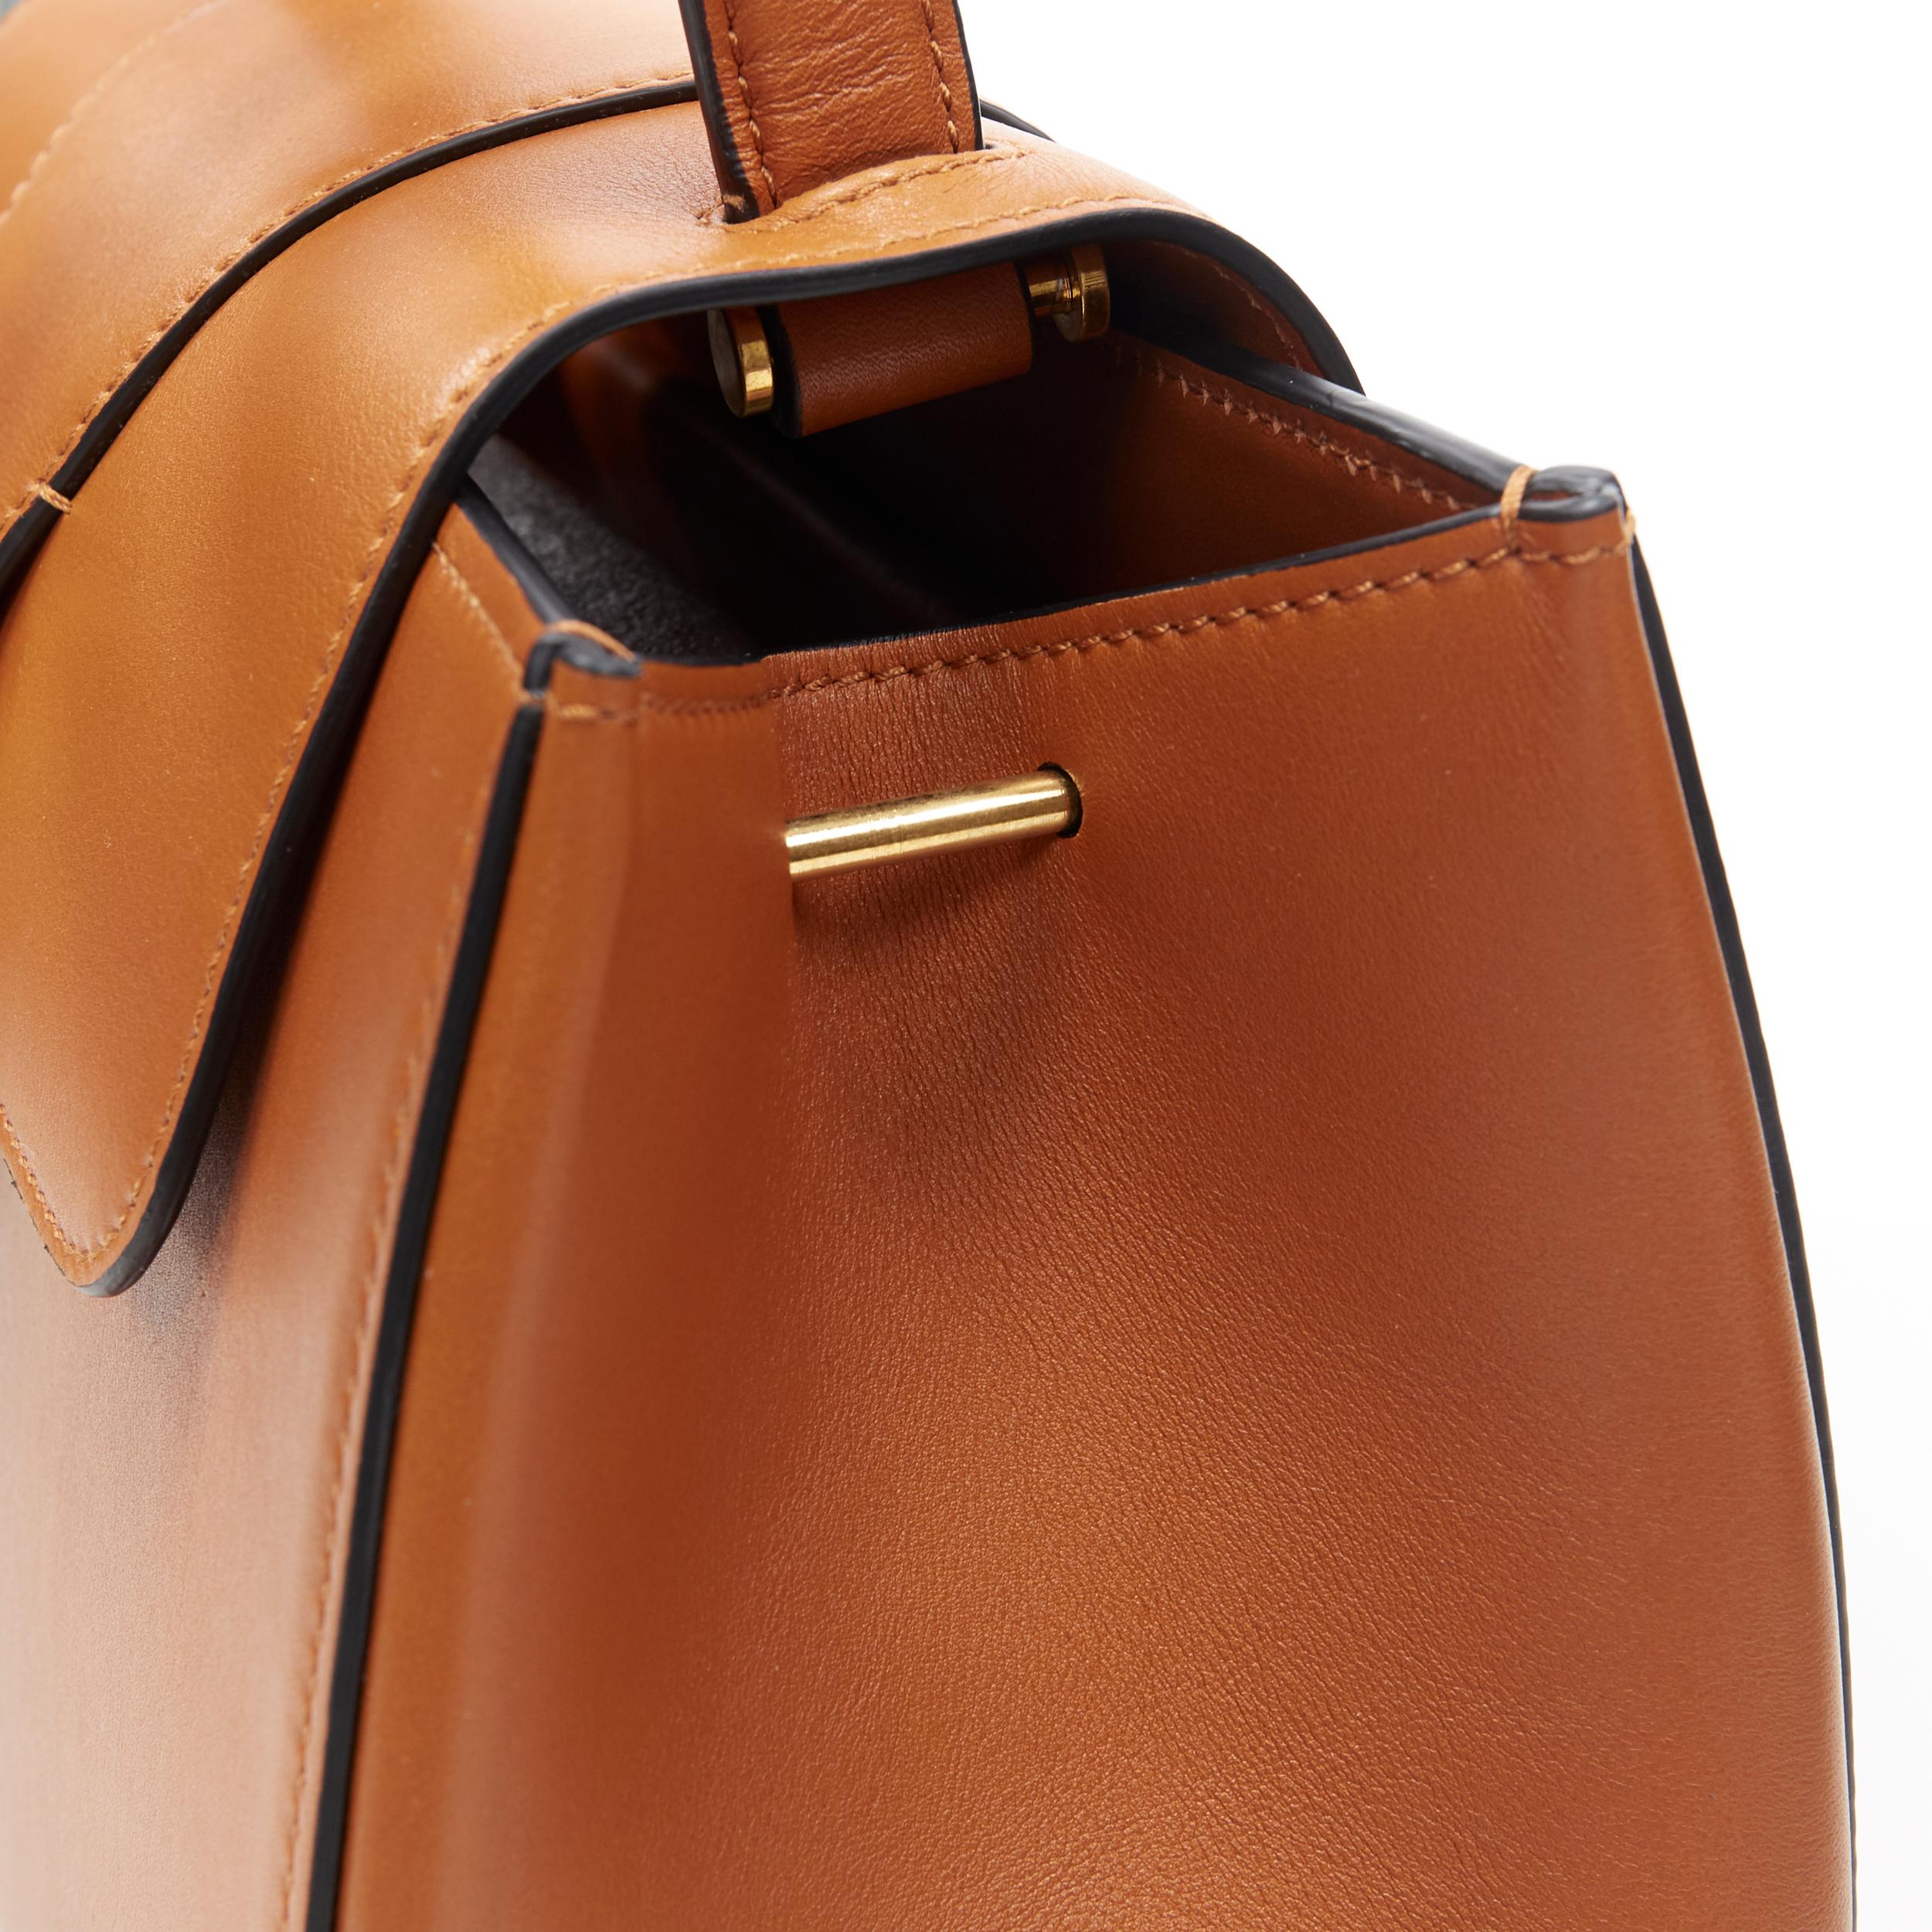 Women's VERSACE Virtus cognac brown leather gold buckle flap top handle satchel bag